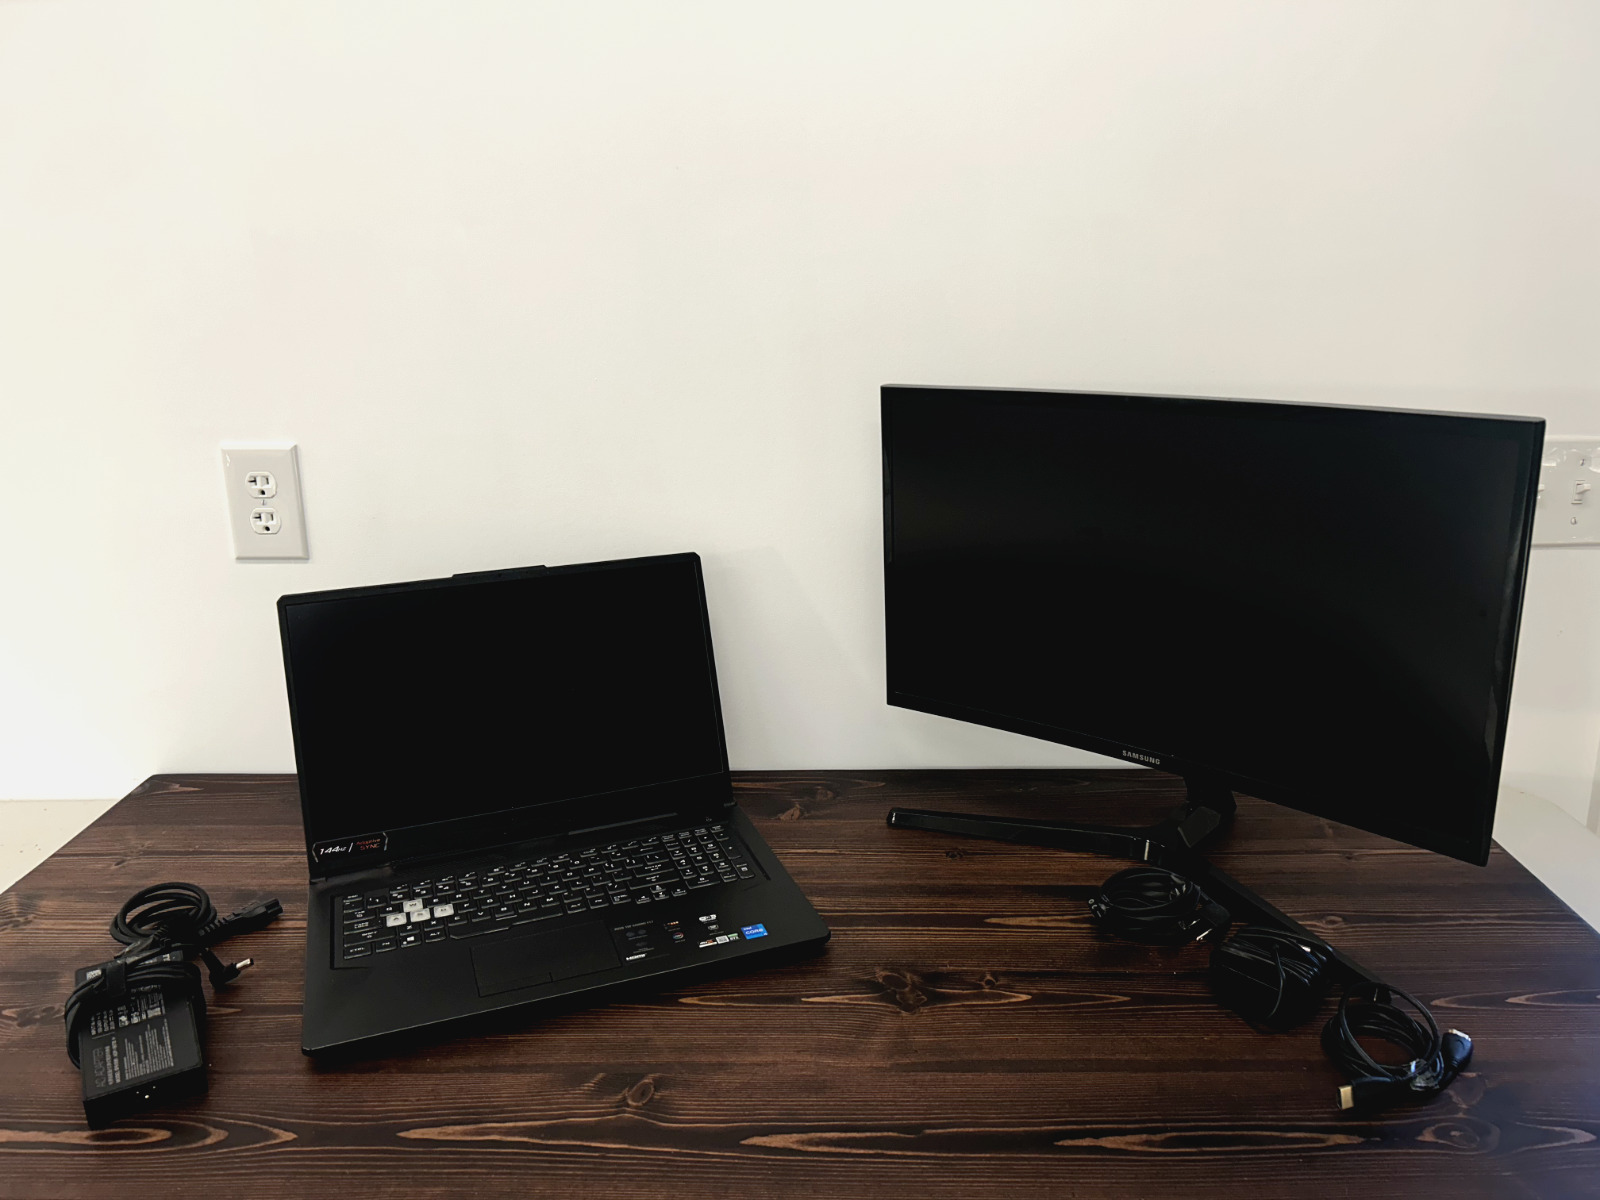 ASUS TUF Gaming Laptop 144Hz FHD - Intel Core i5-12500H + Samsung 144 hz monitor